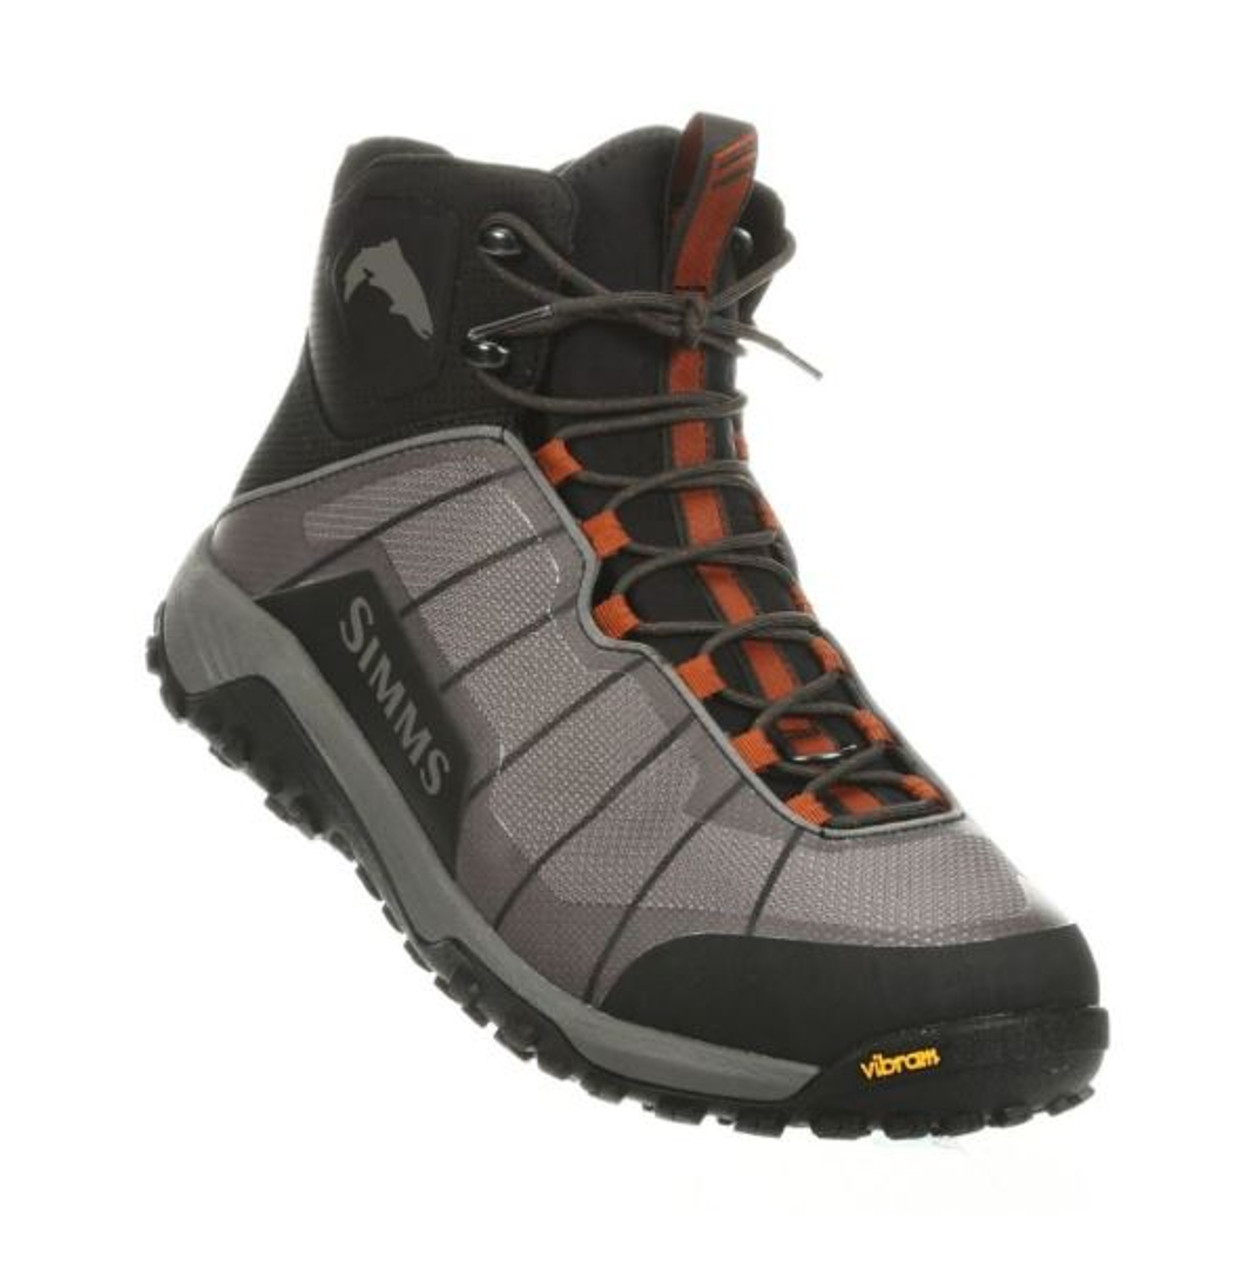 Flyweight Wading Boot - Vibram Sole (Size 11) - Steel Grey